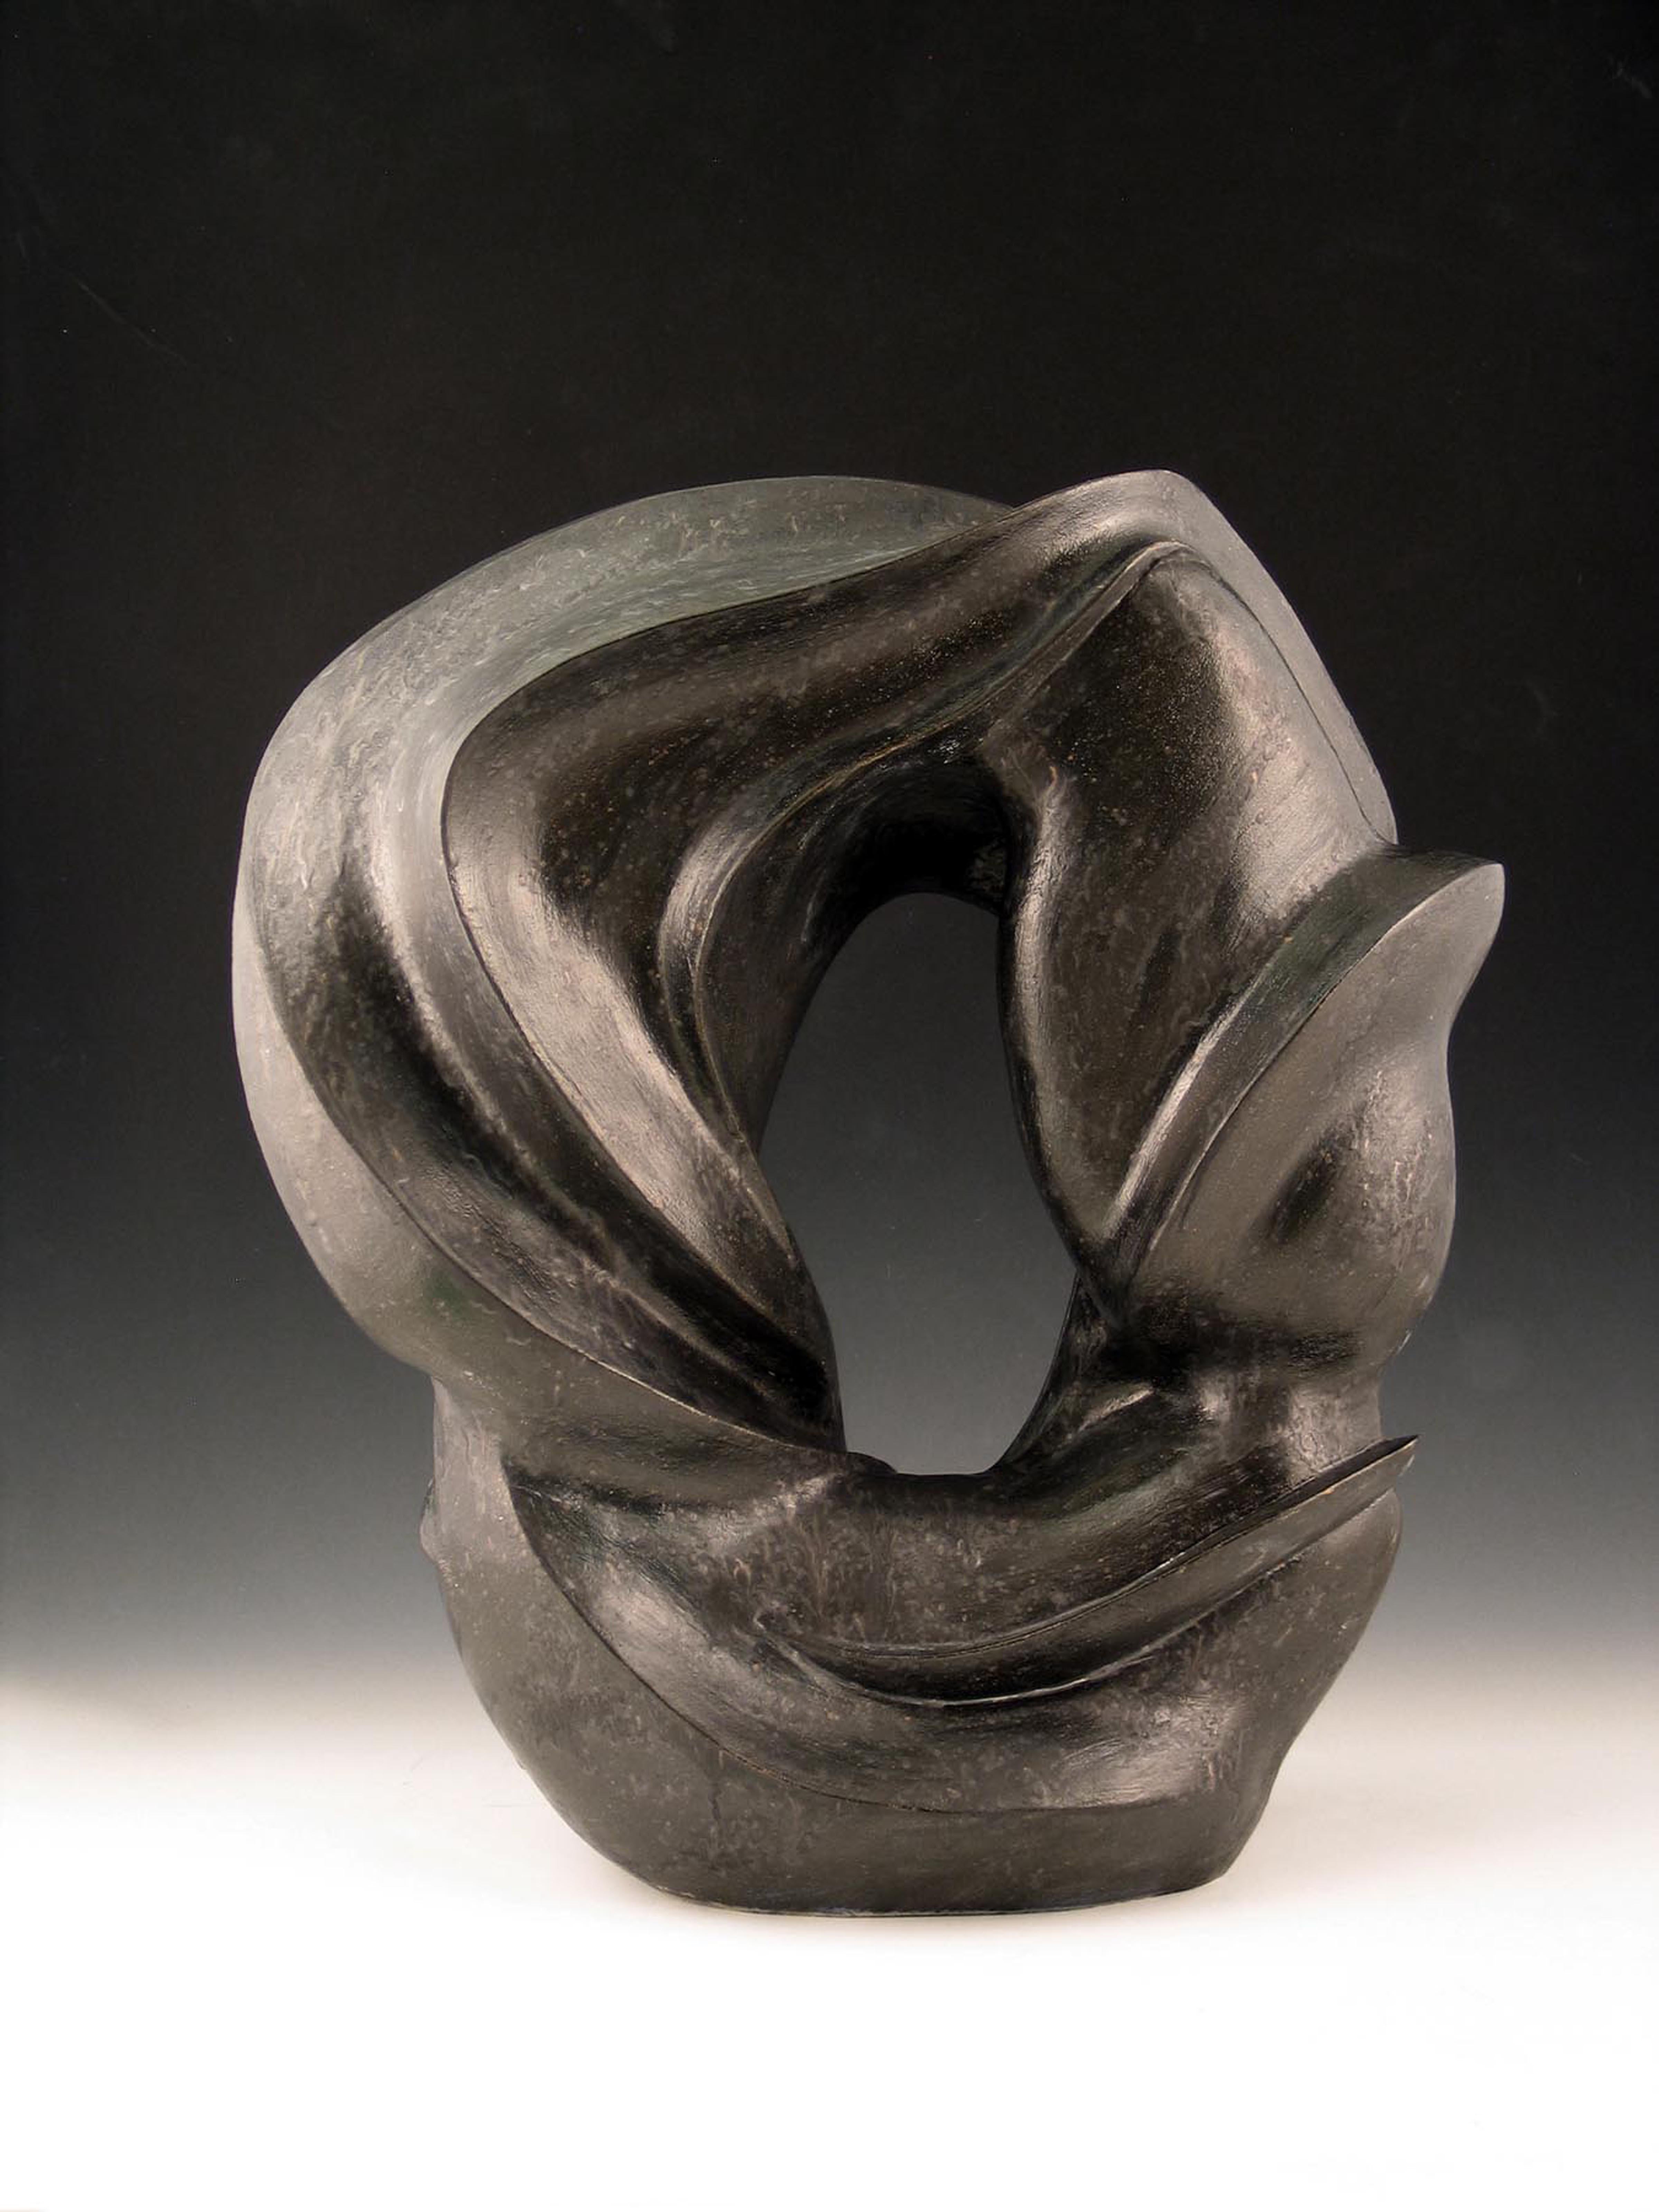 Elaine Lorenz Abstract Sculpture - "Around About”, ceramic sculpture of swirling forms in gun metal black glaze